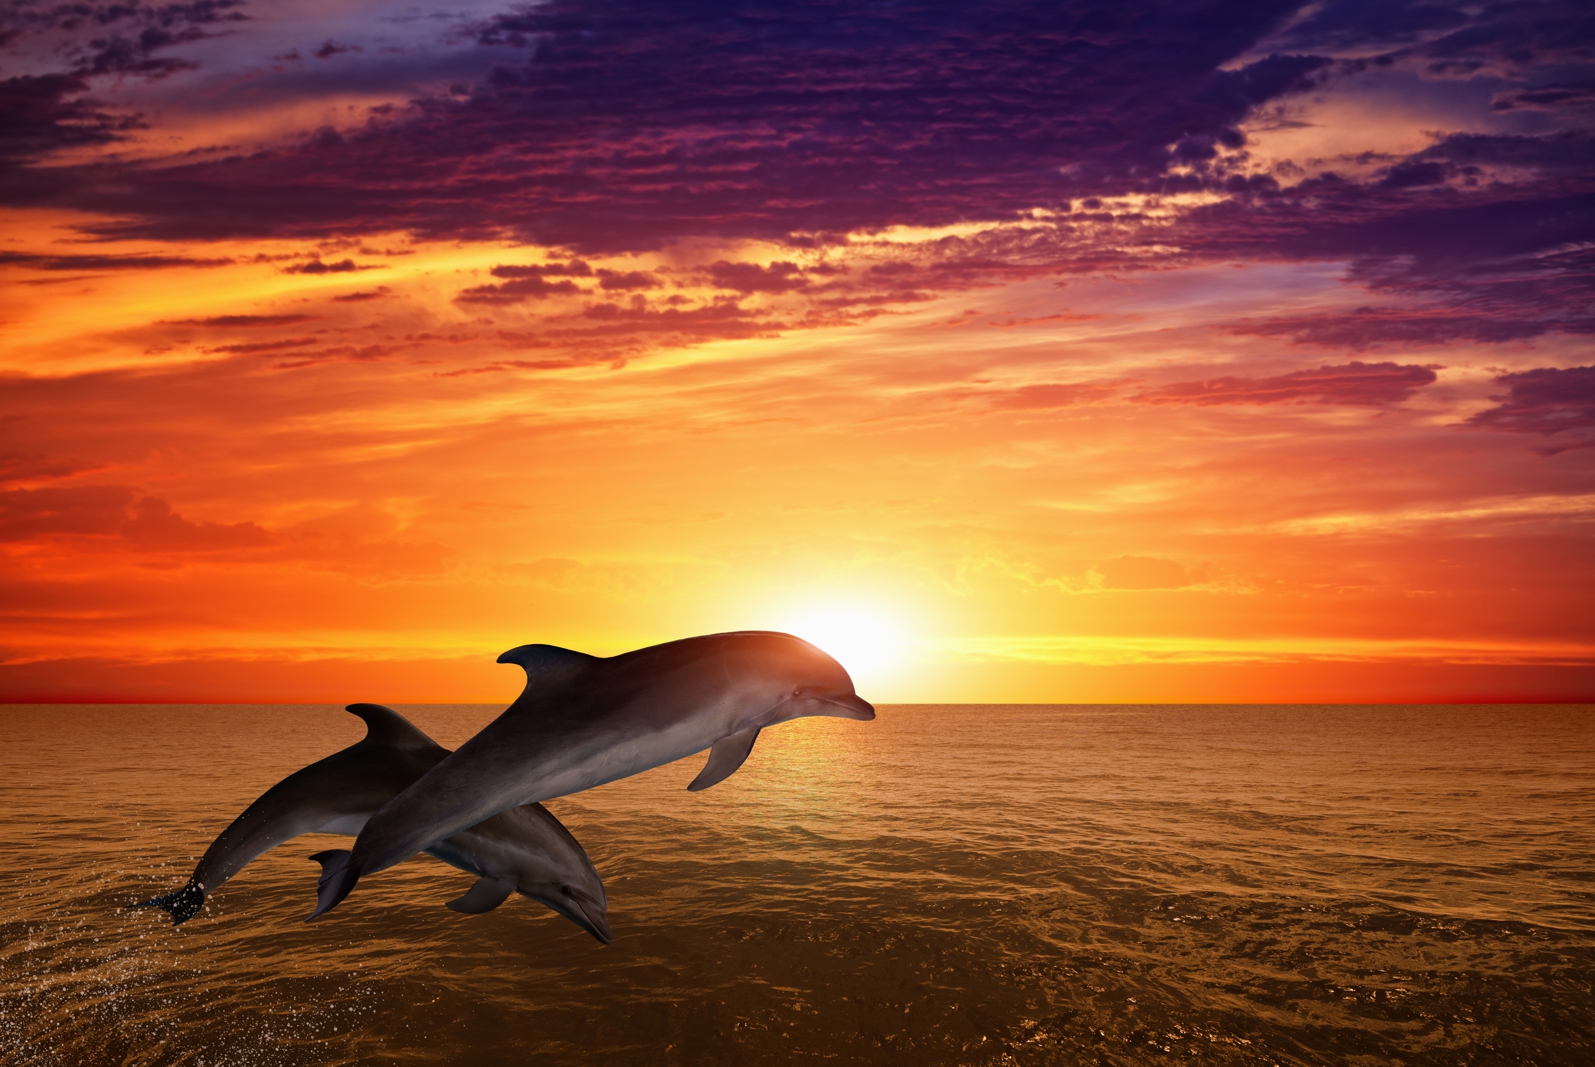 Magnettafel Pinnwand XXL Bild Delfine Delphine Sonnenuntergang